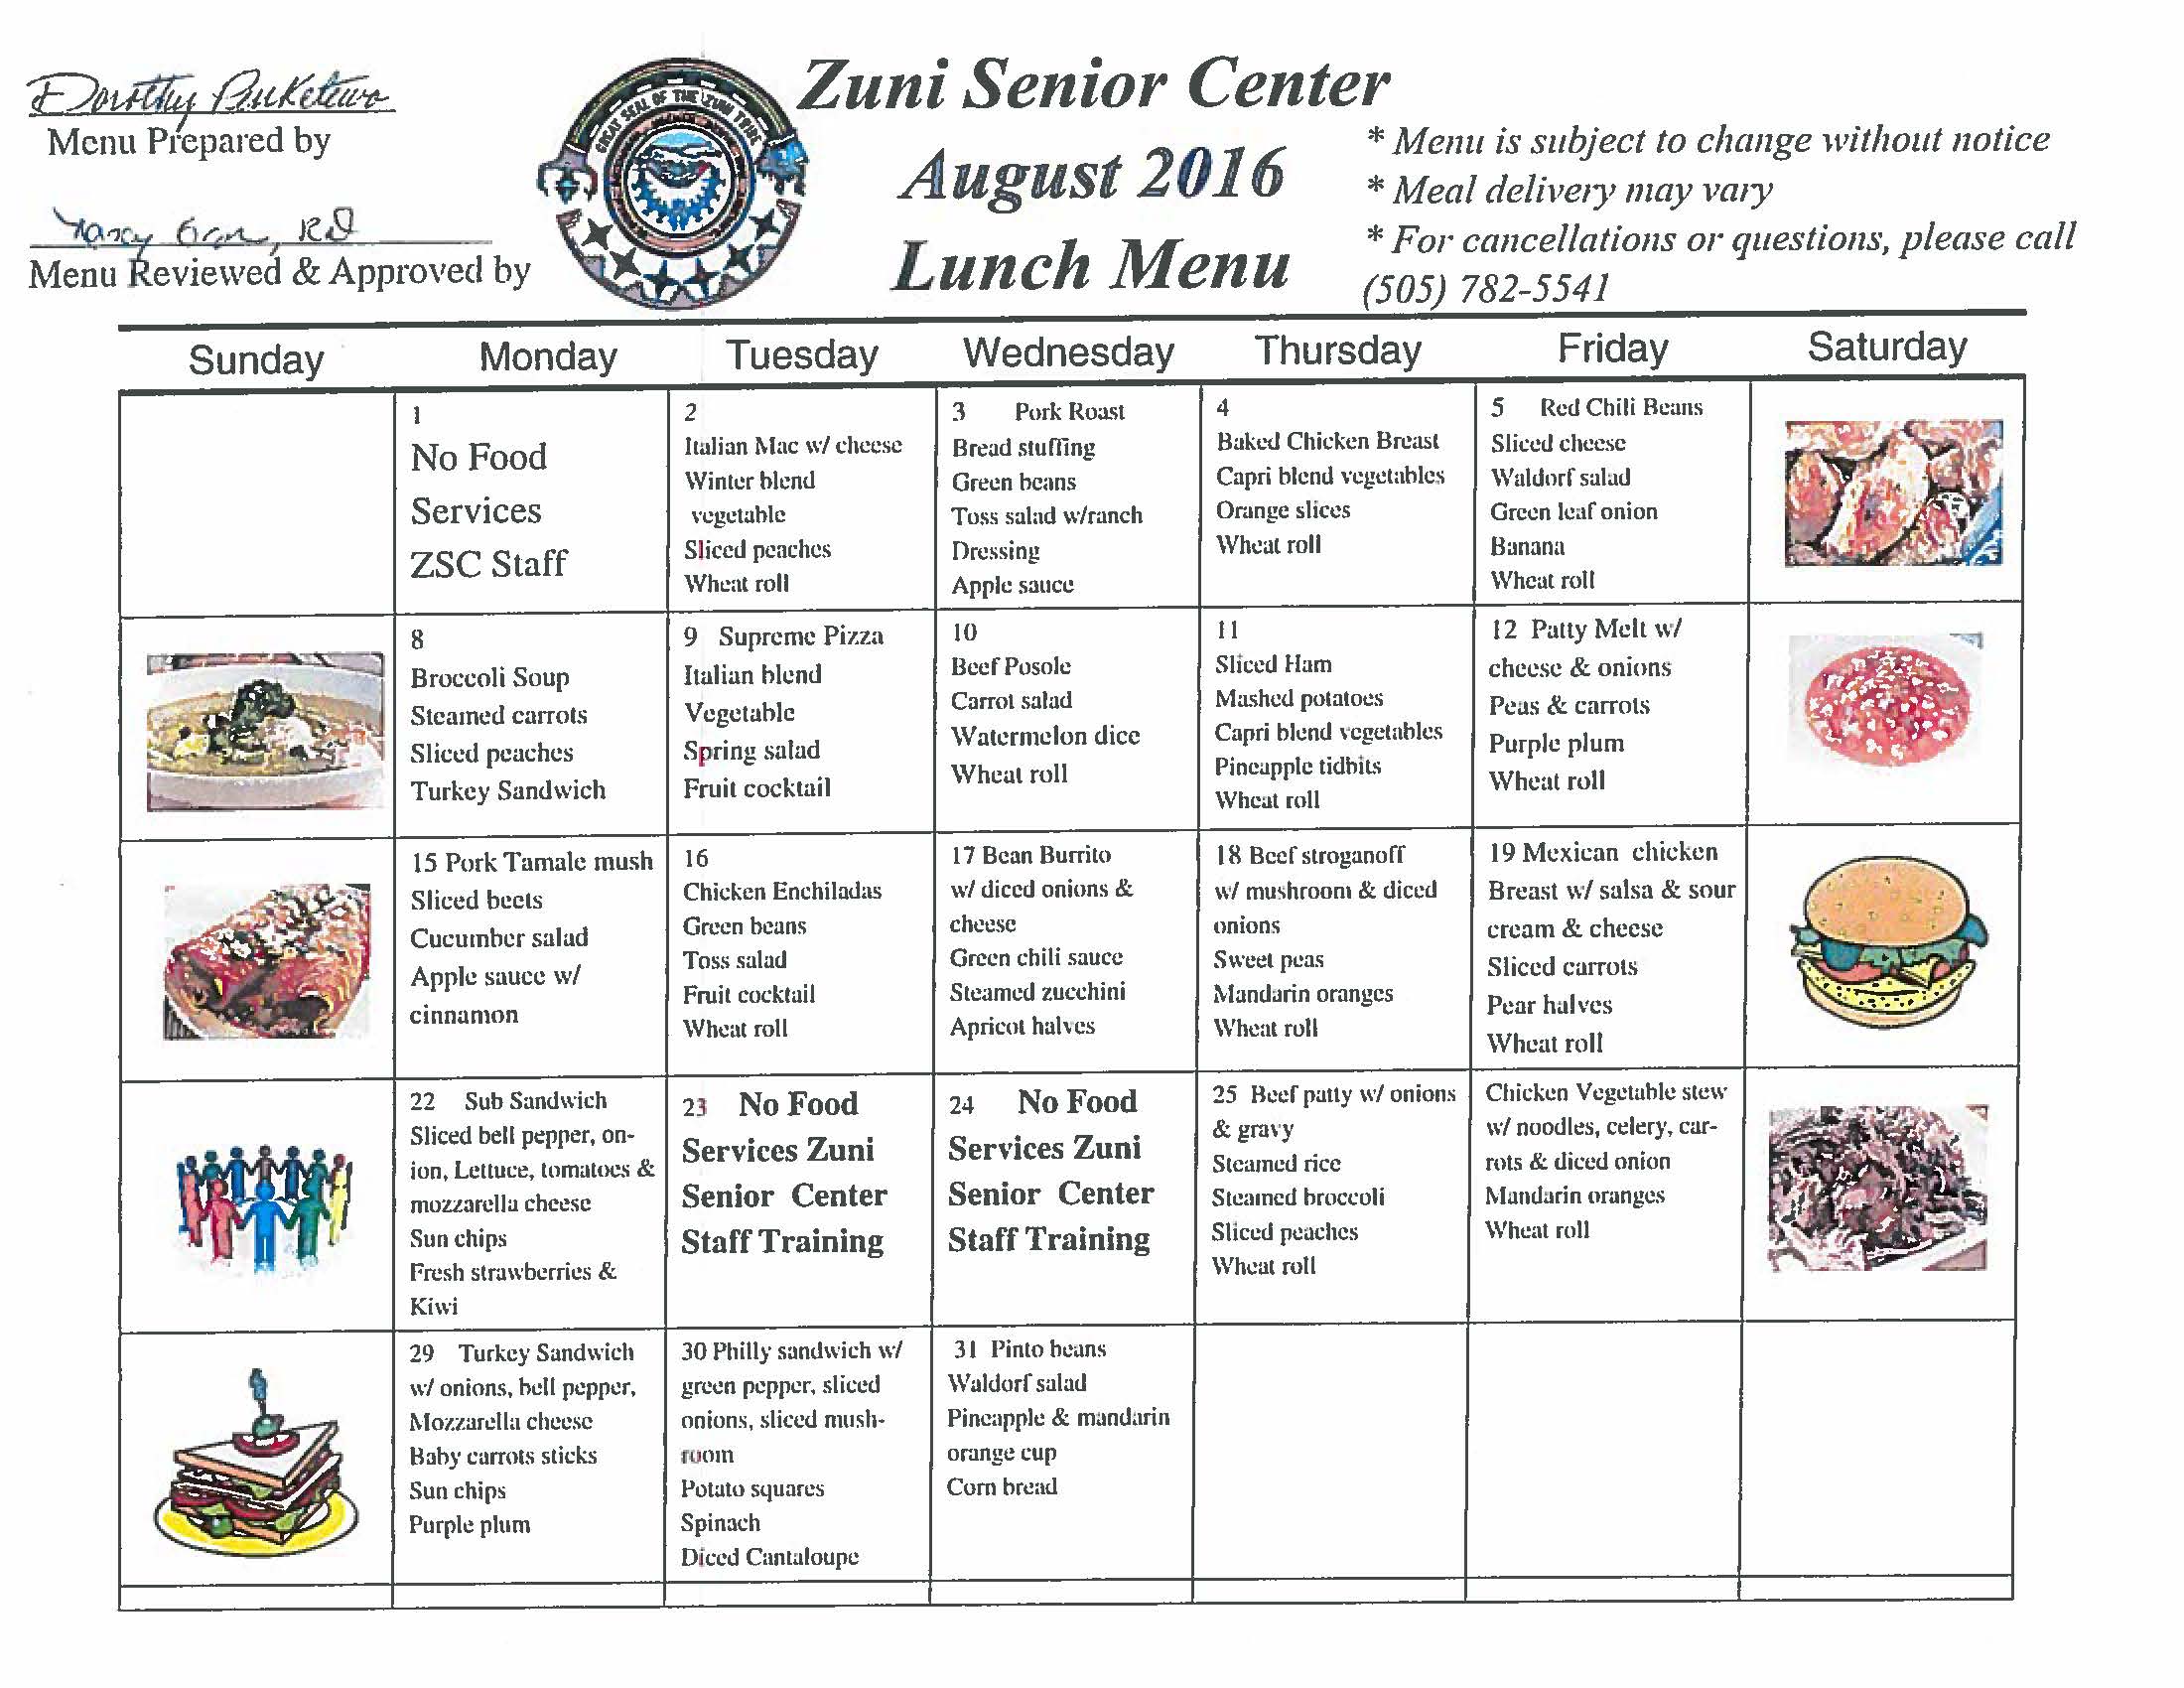 Maplewood Career Center Lunch Menu Meals on Wheels/ Senior Lunch Menu